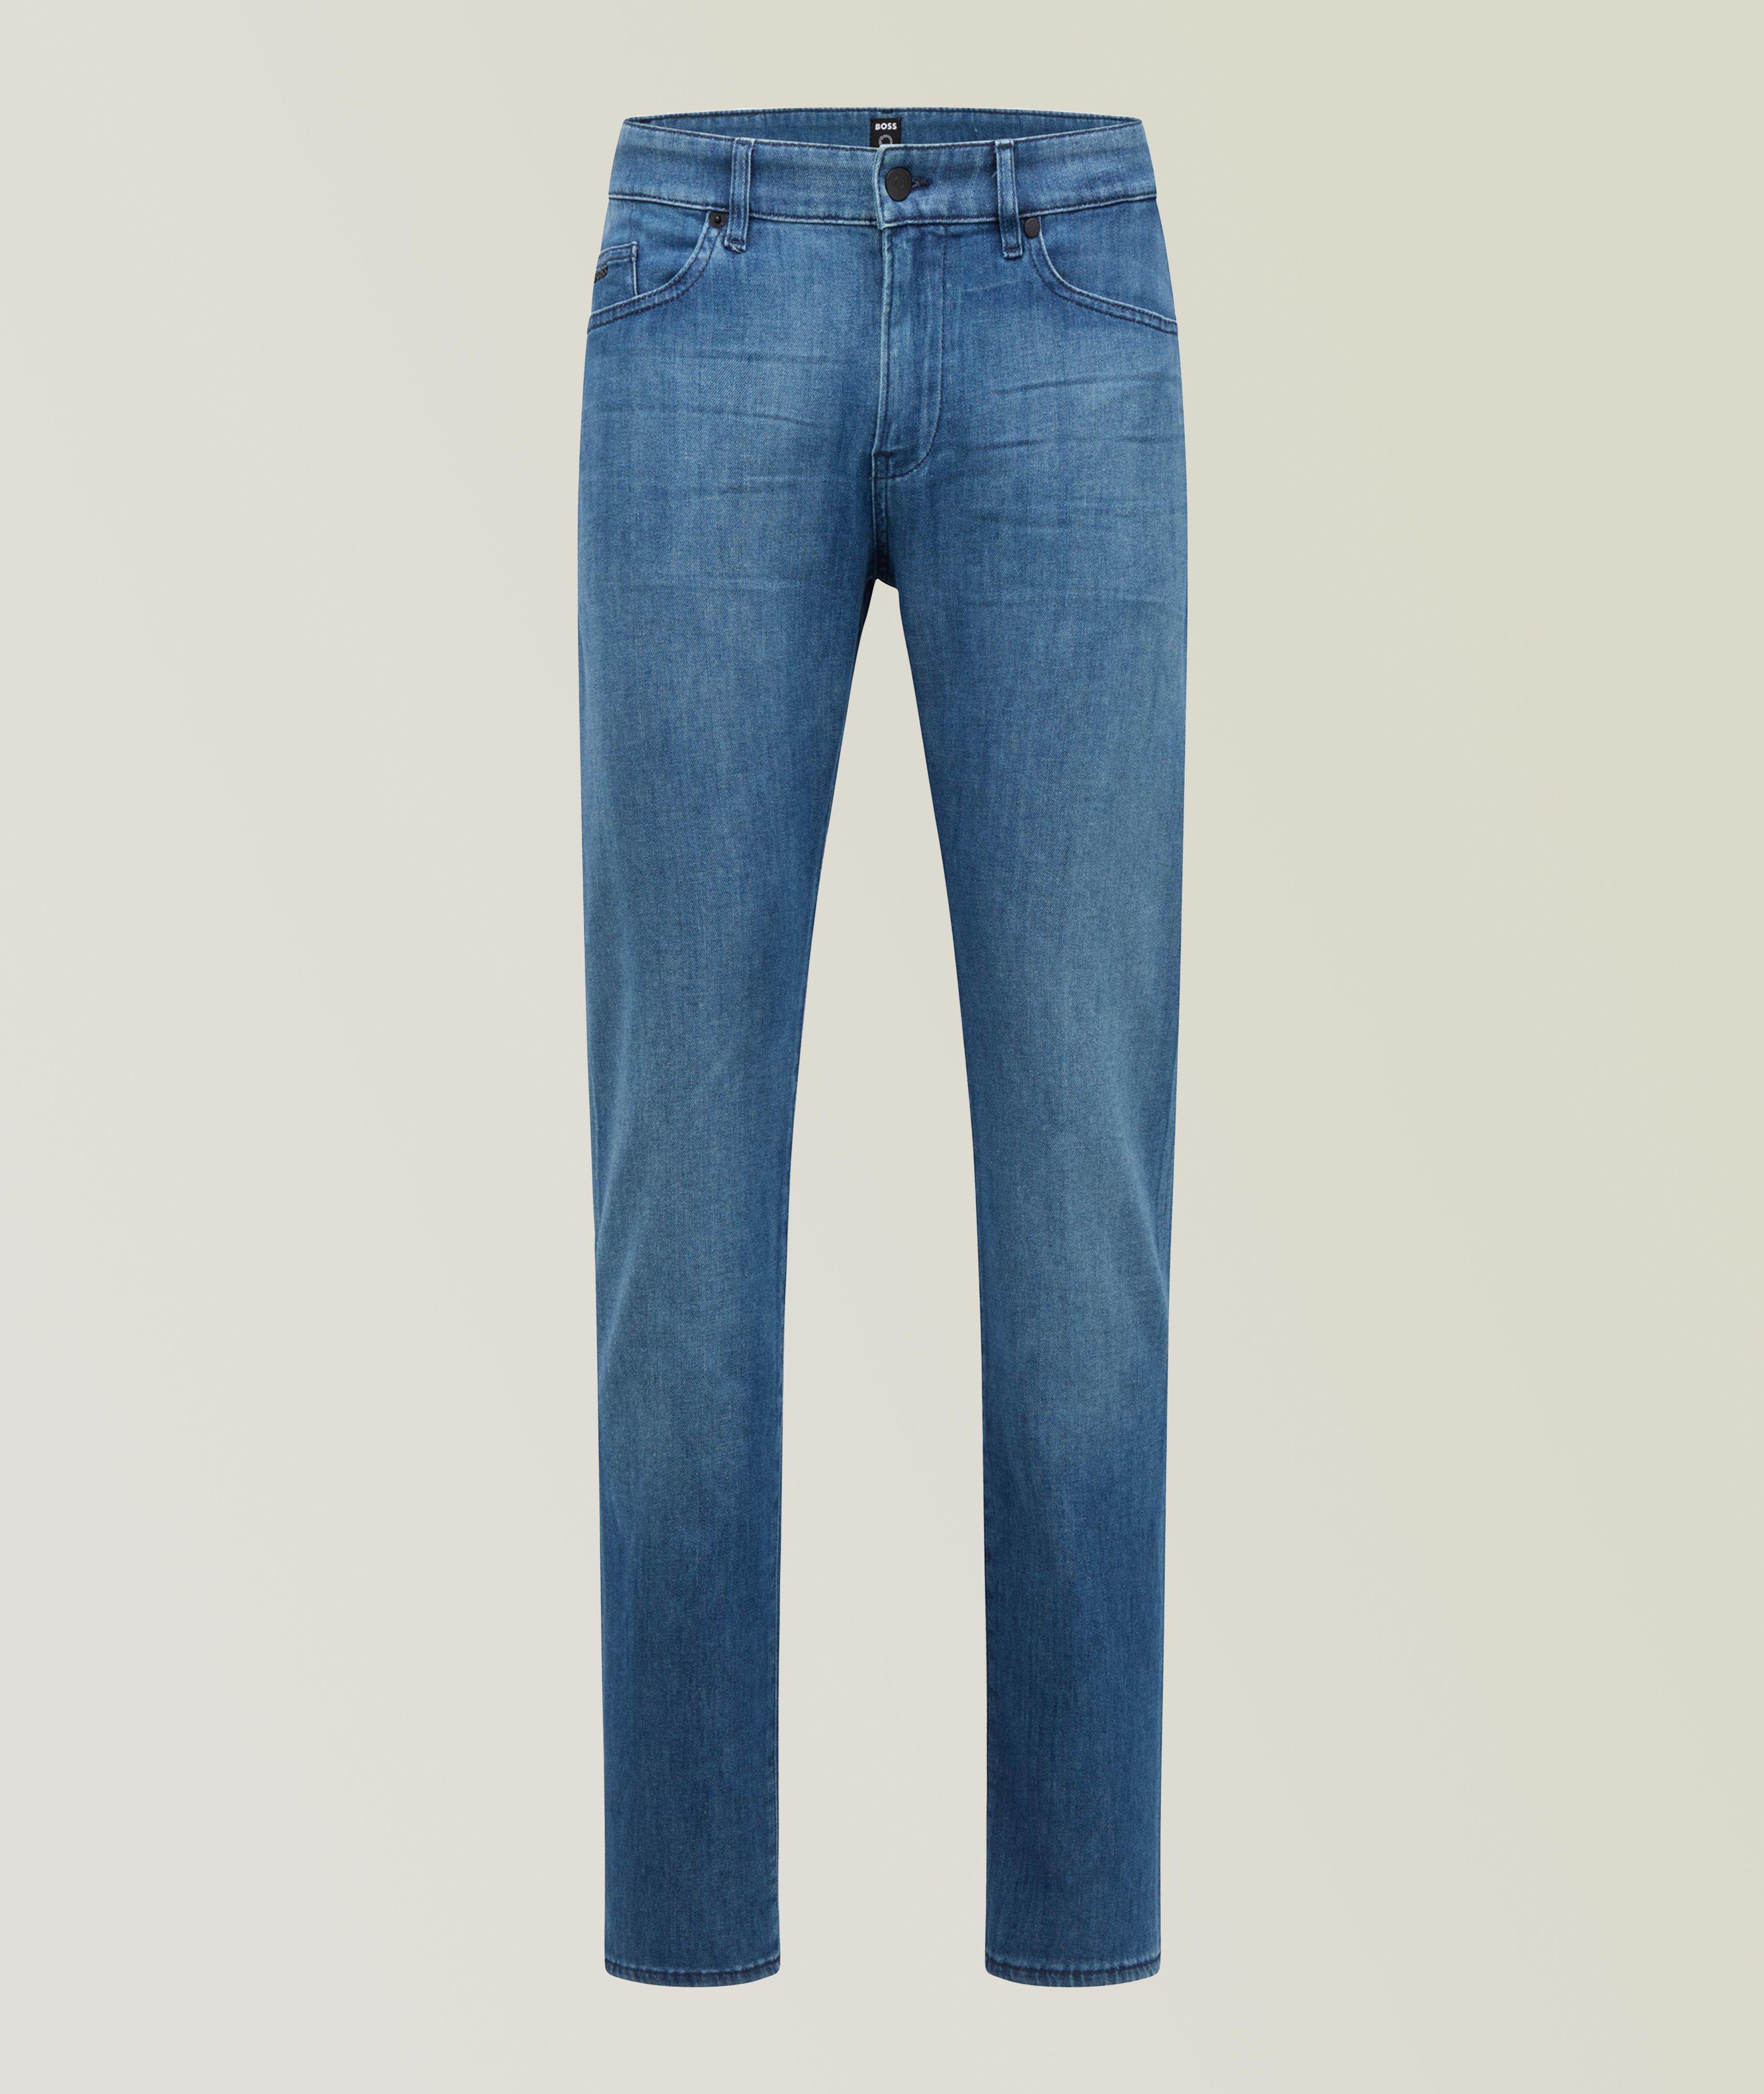 Slim Fit Stretch-Cotton Italian Denim Jeans image 0